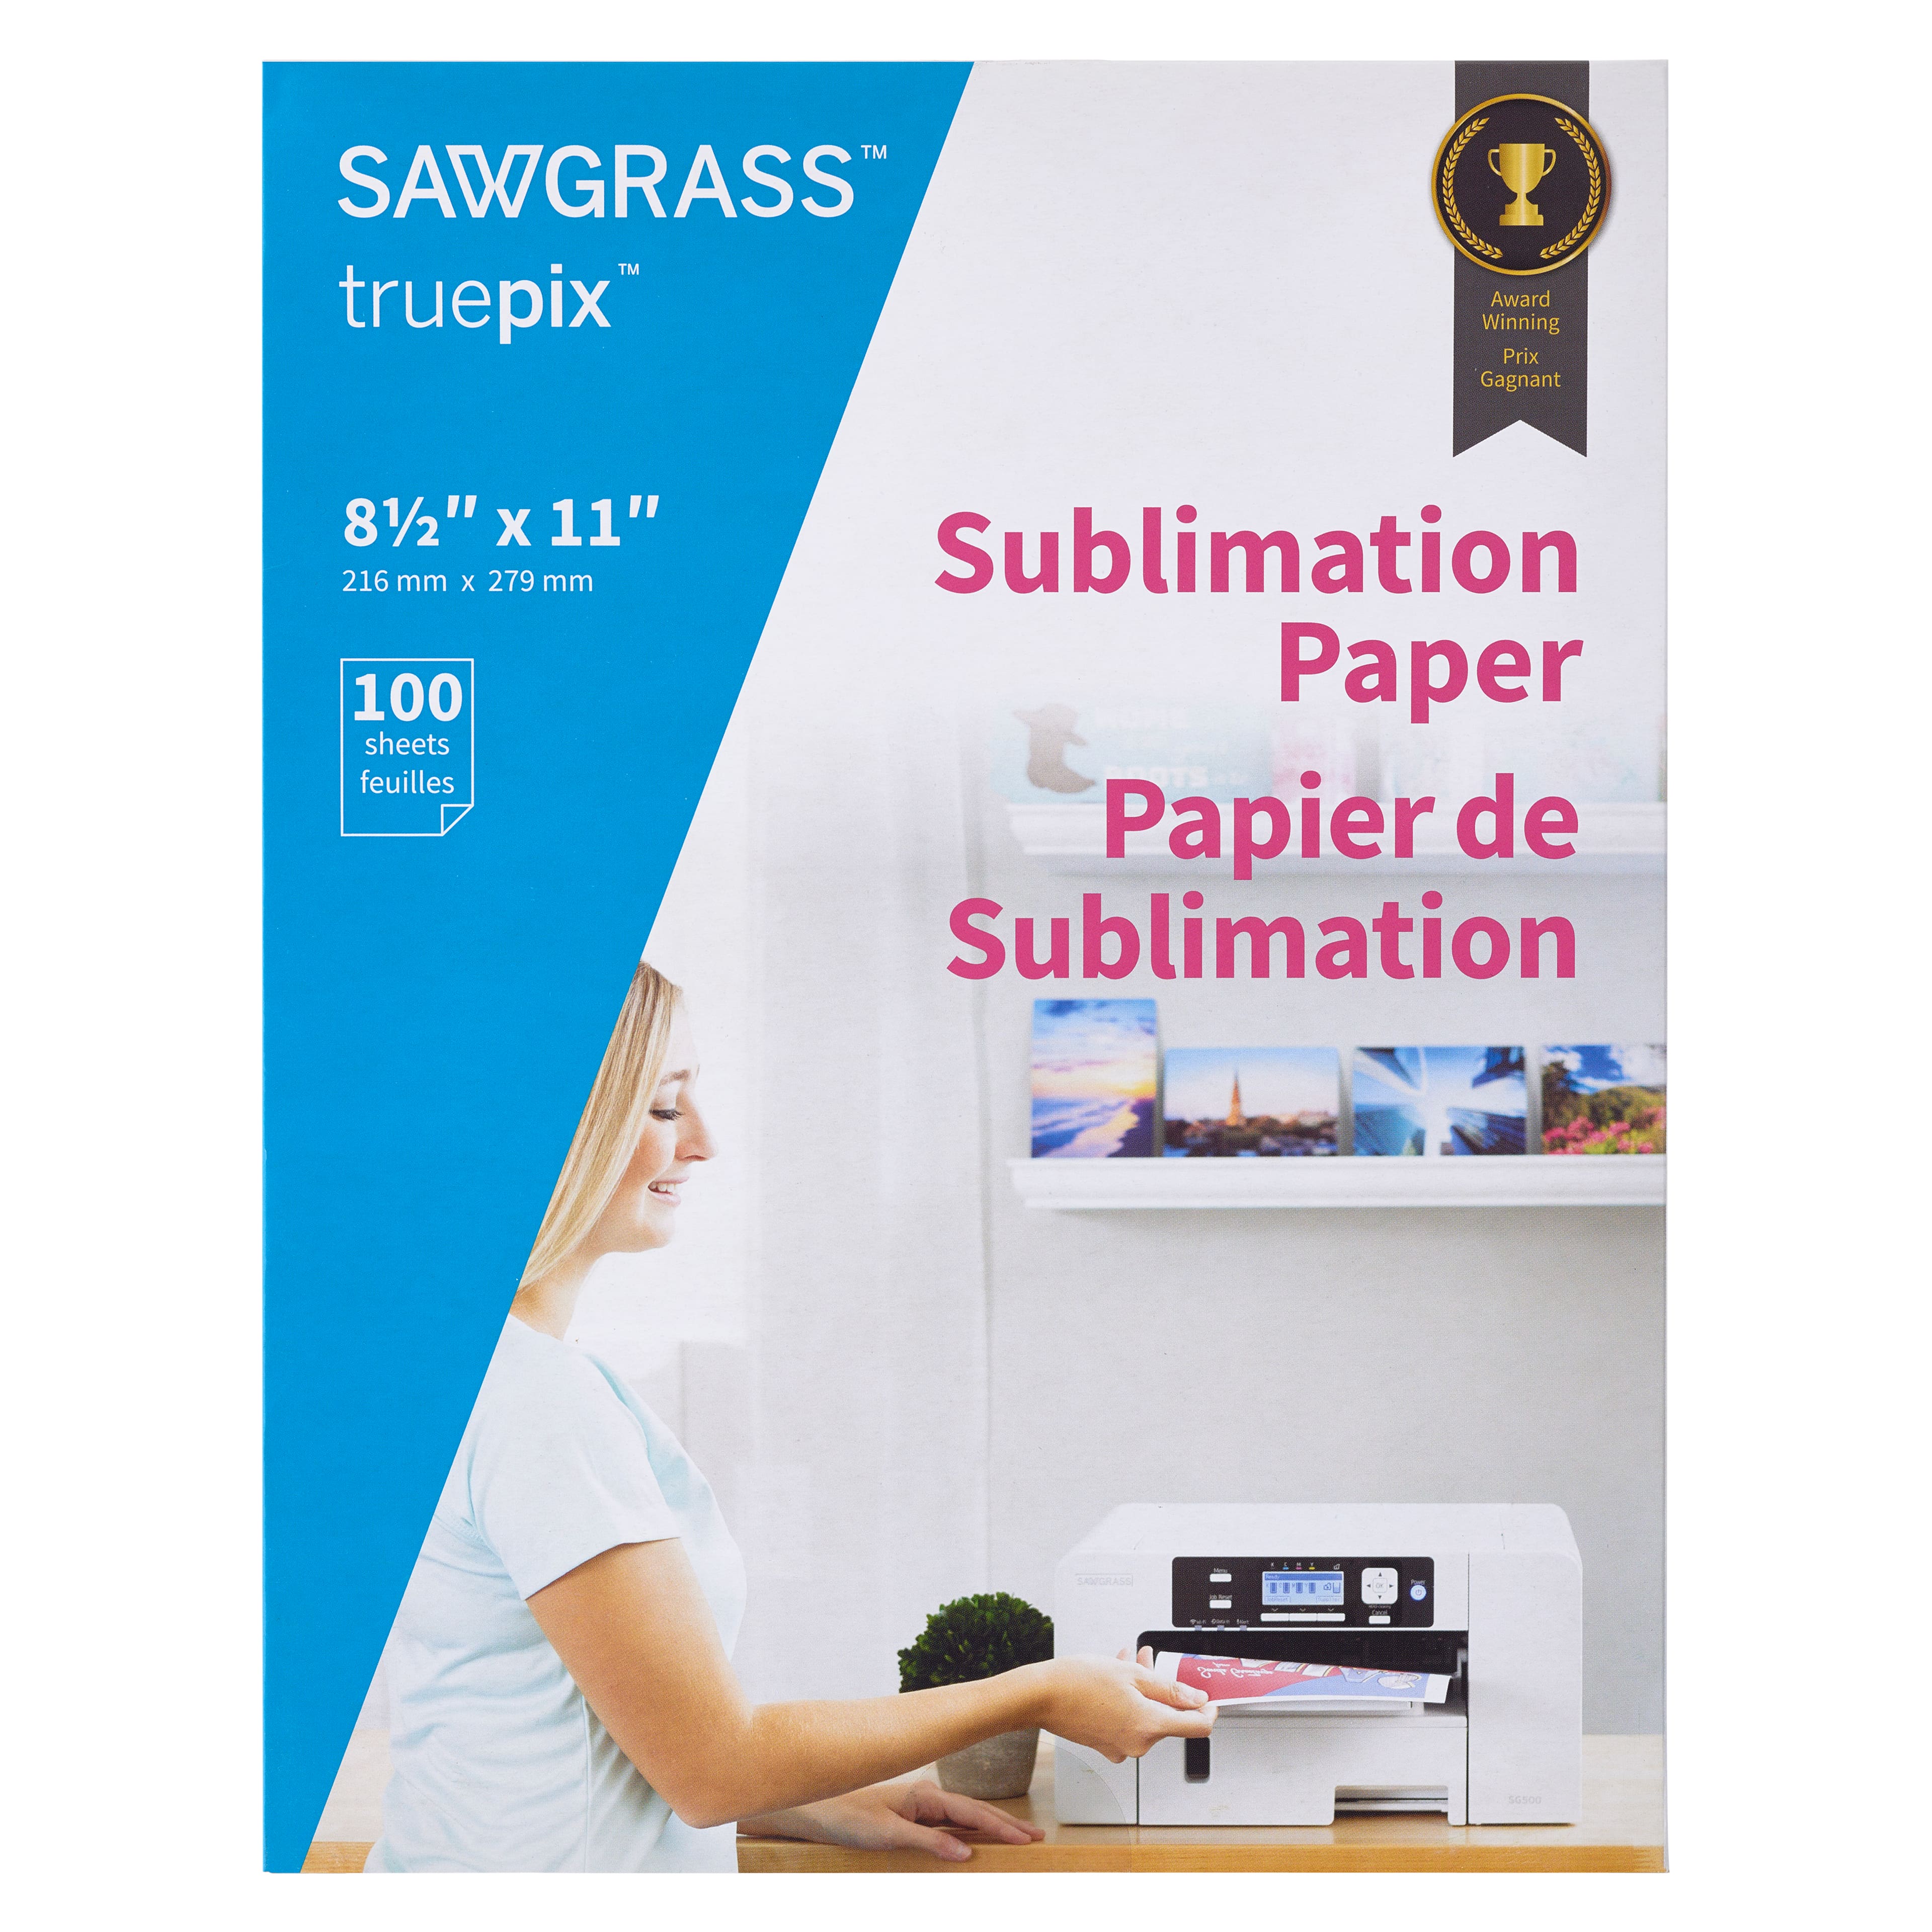 Sawgrass™ Truepix Sublimation Paper